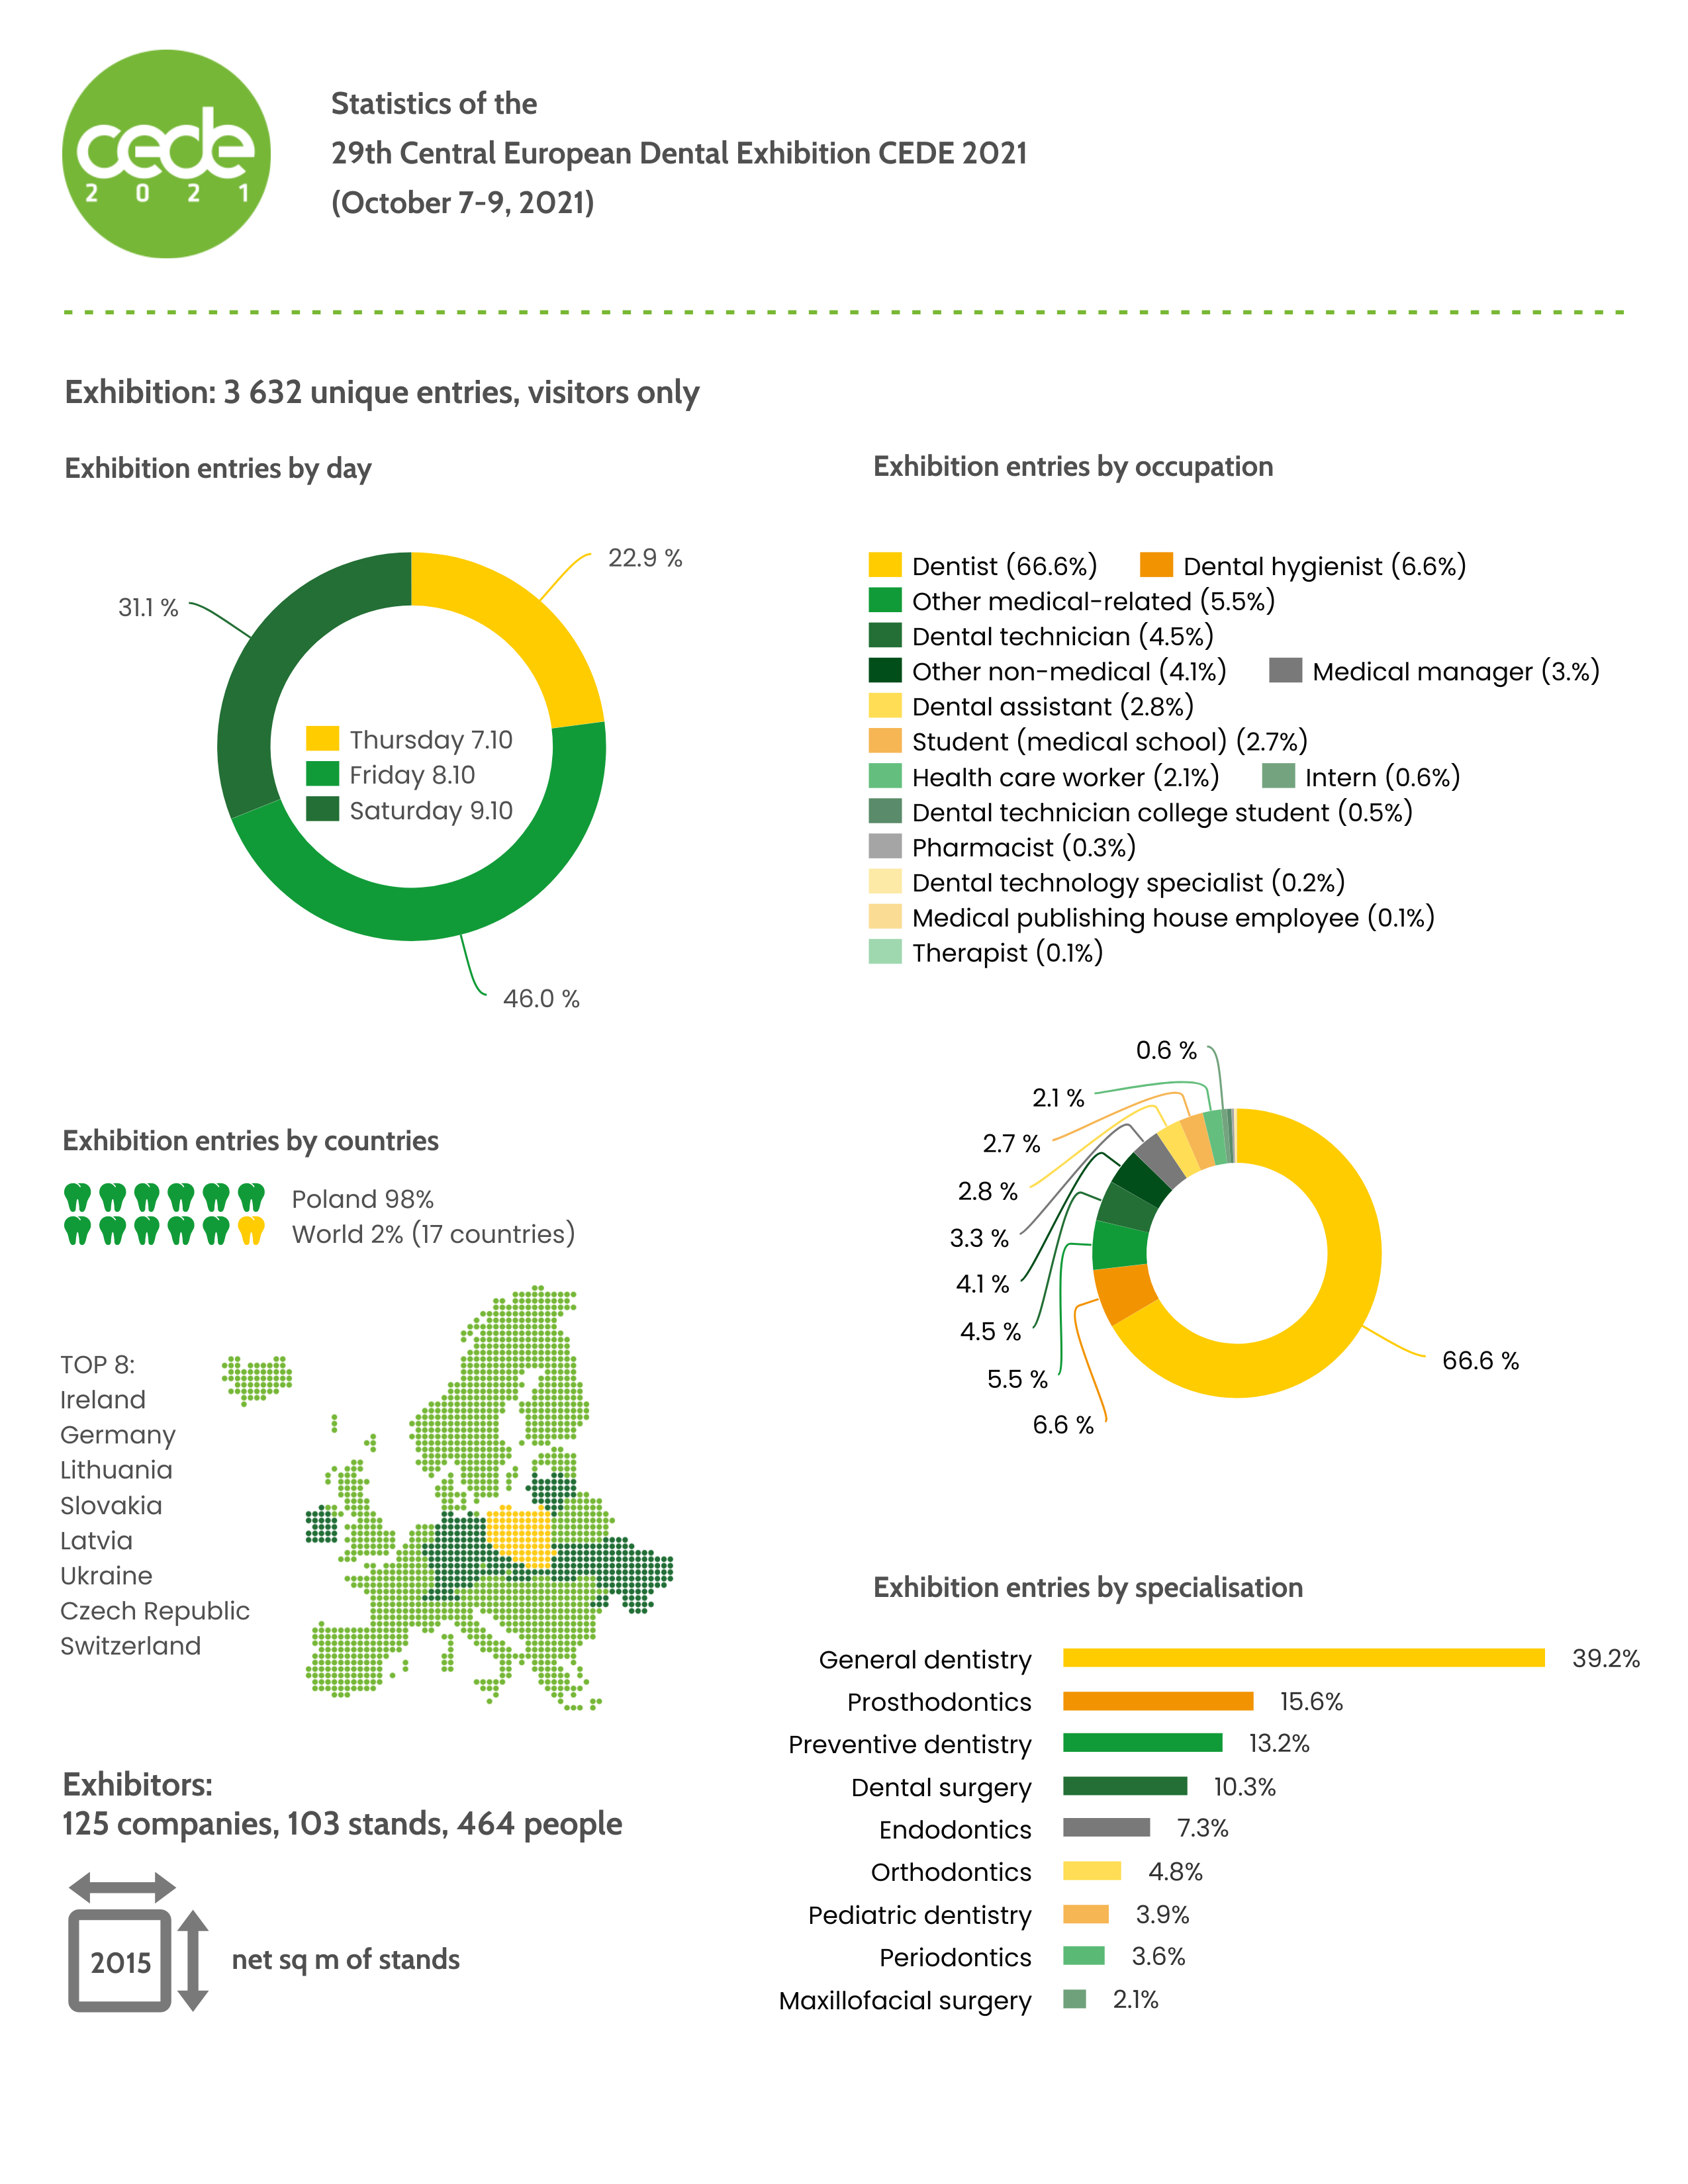 CEDE 2021 Statistics